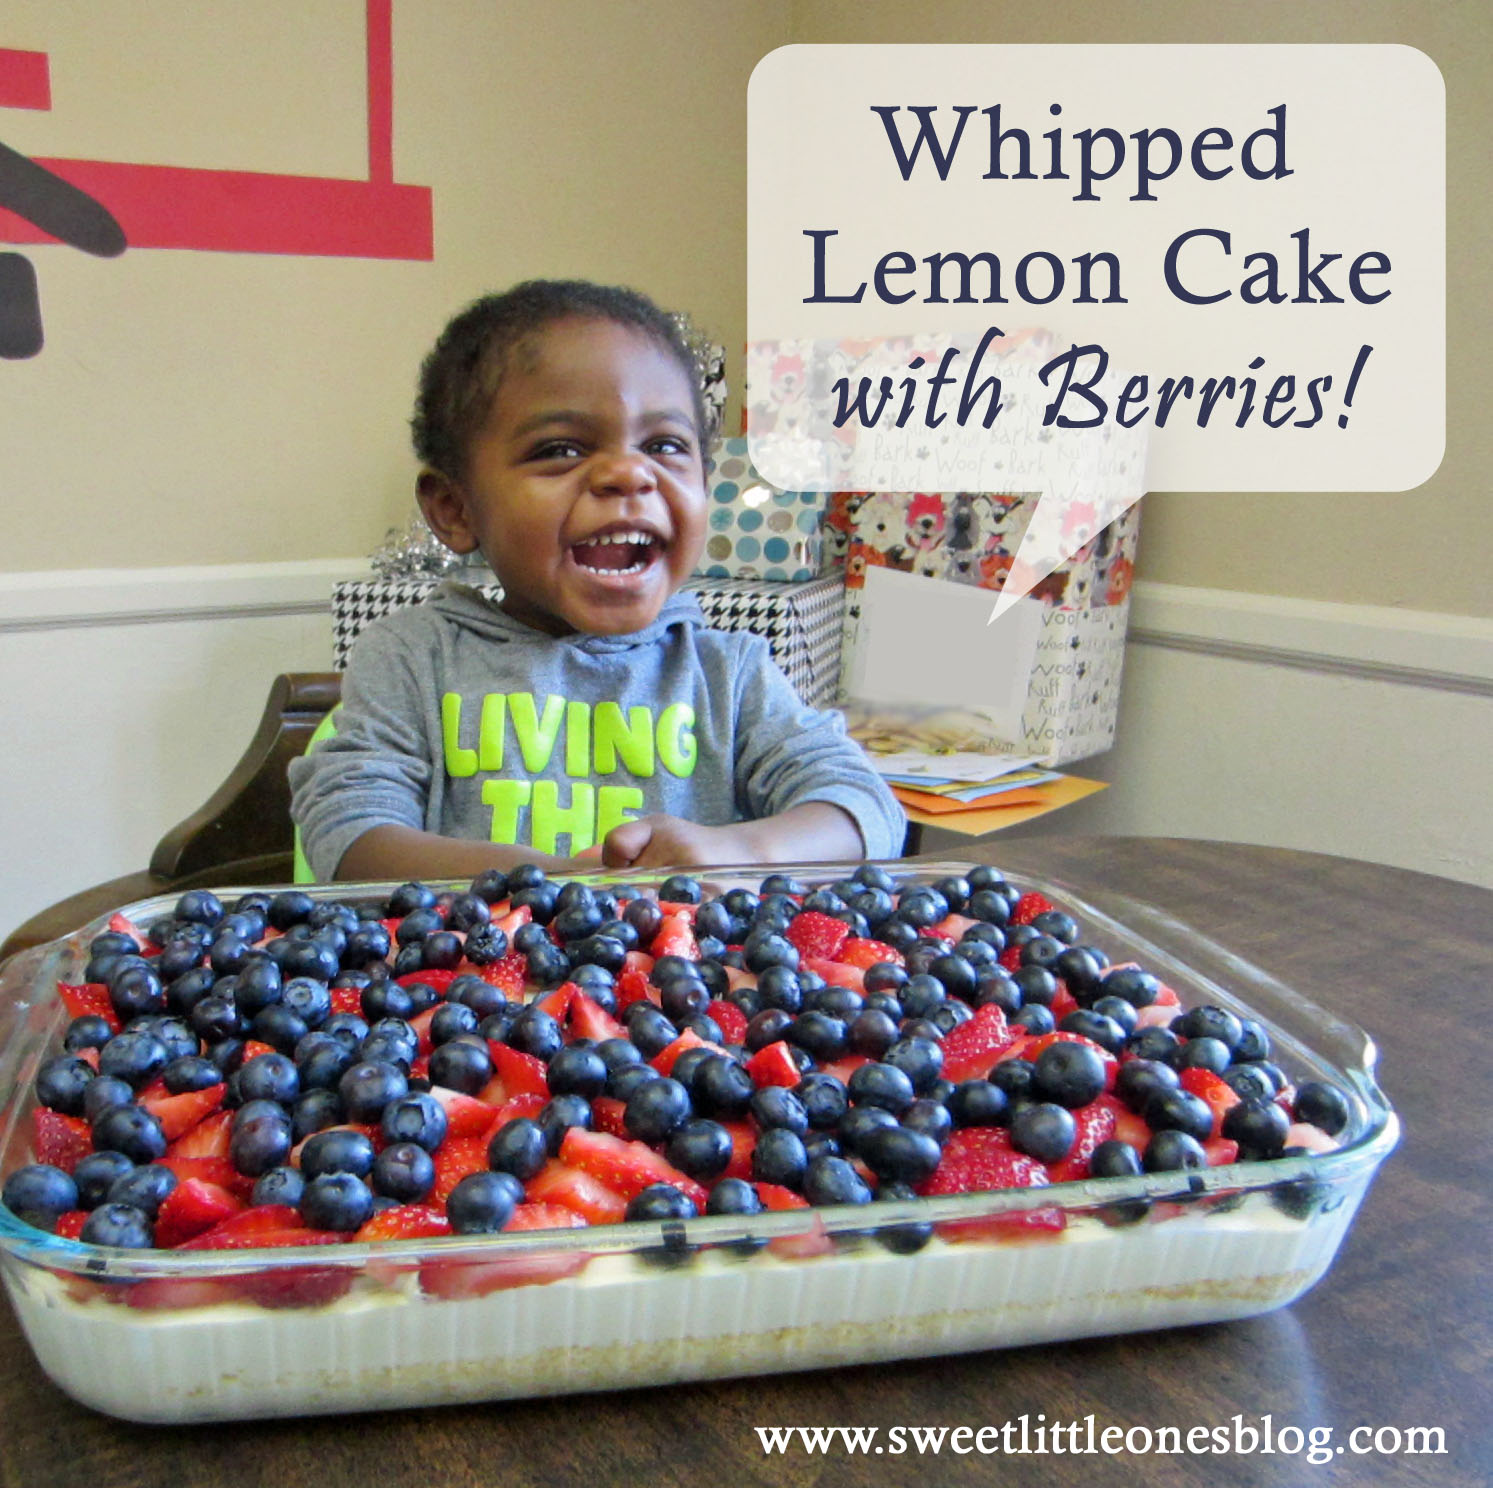 Whipped Lemon Cake with Berries Recipe - www.sweetlittleonesblog.com